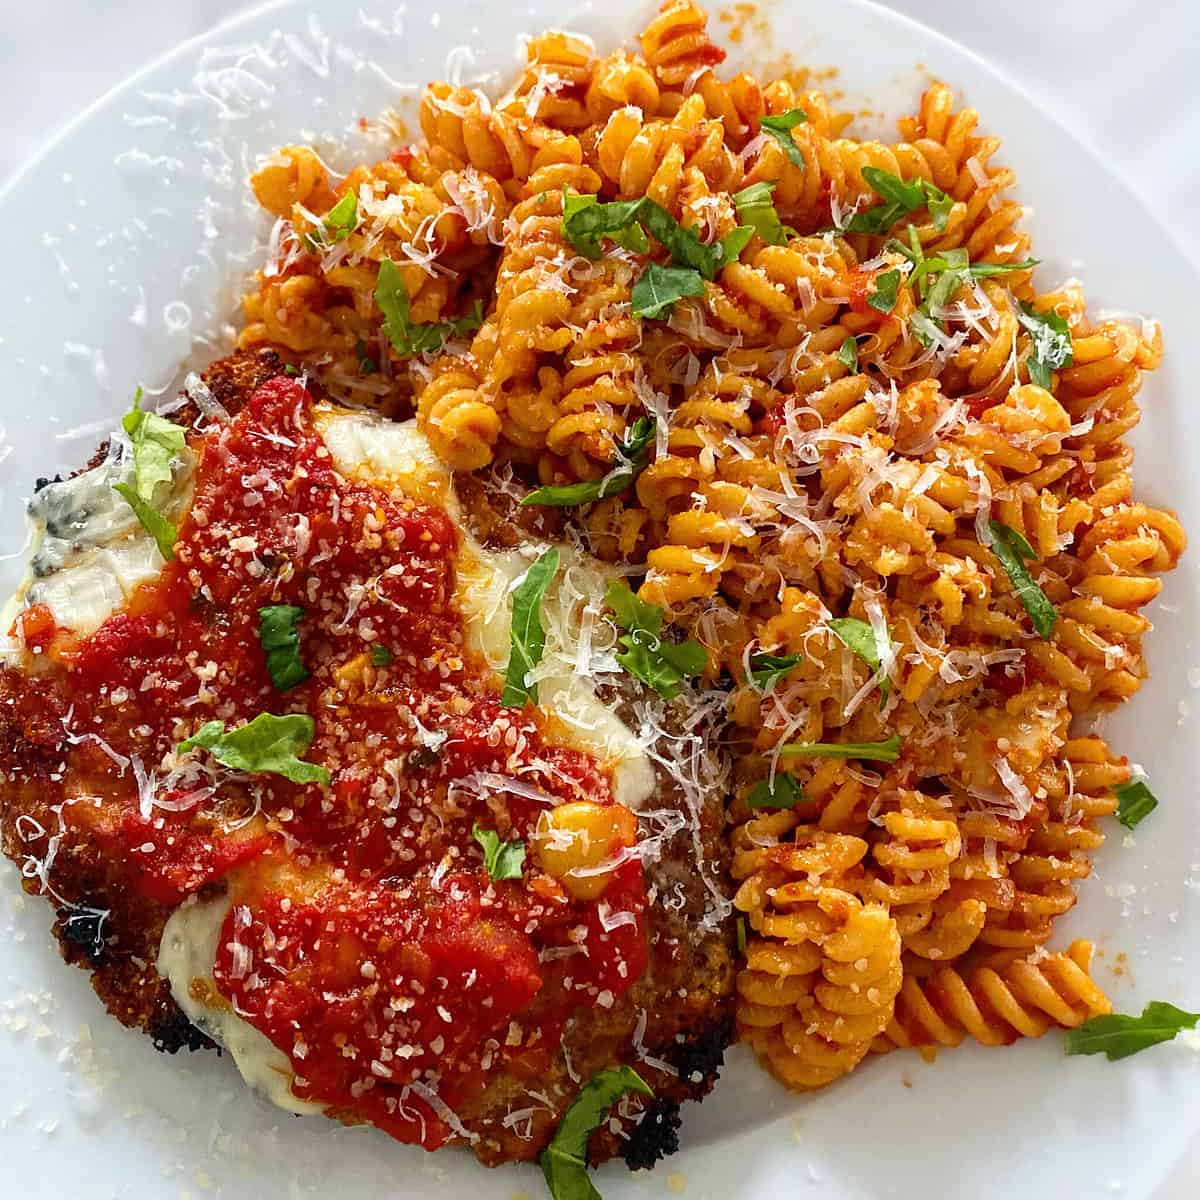 https://evseats.com/wp-content/uploads/2022/10/chicken-parmesan-spicy-fusilli-pasta-2-scaled.jpg